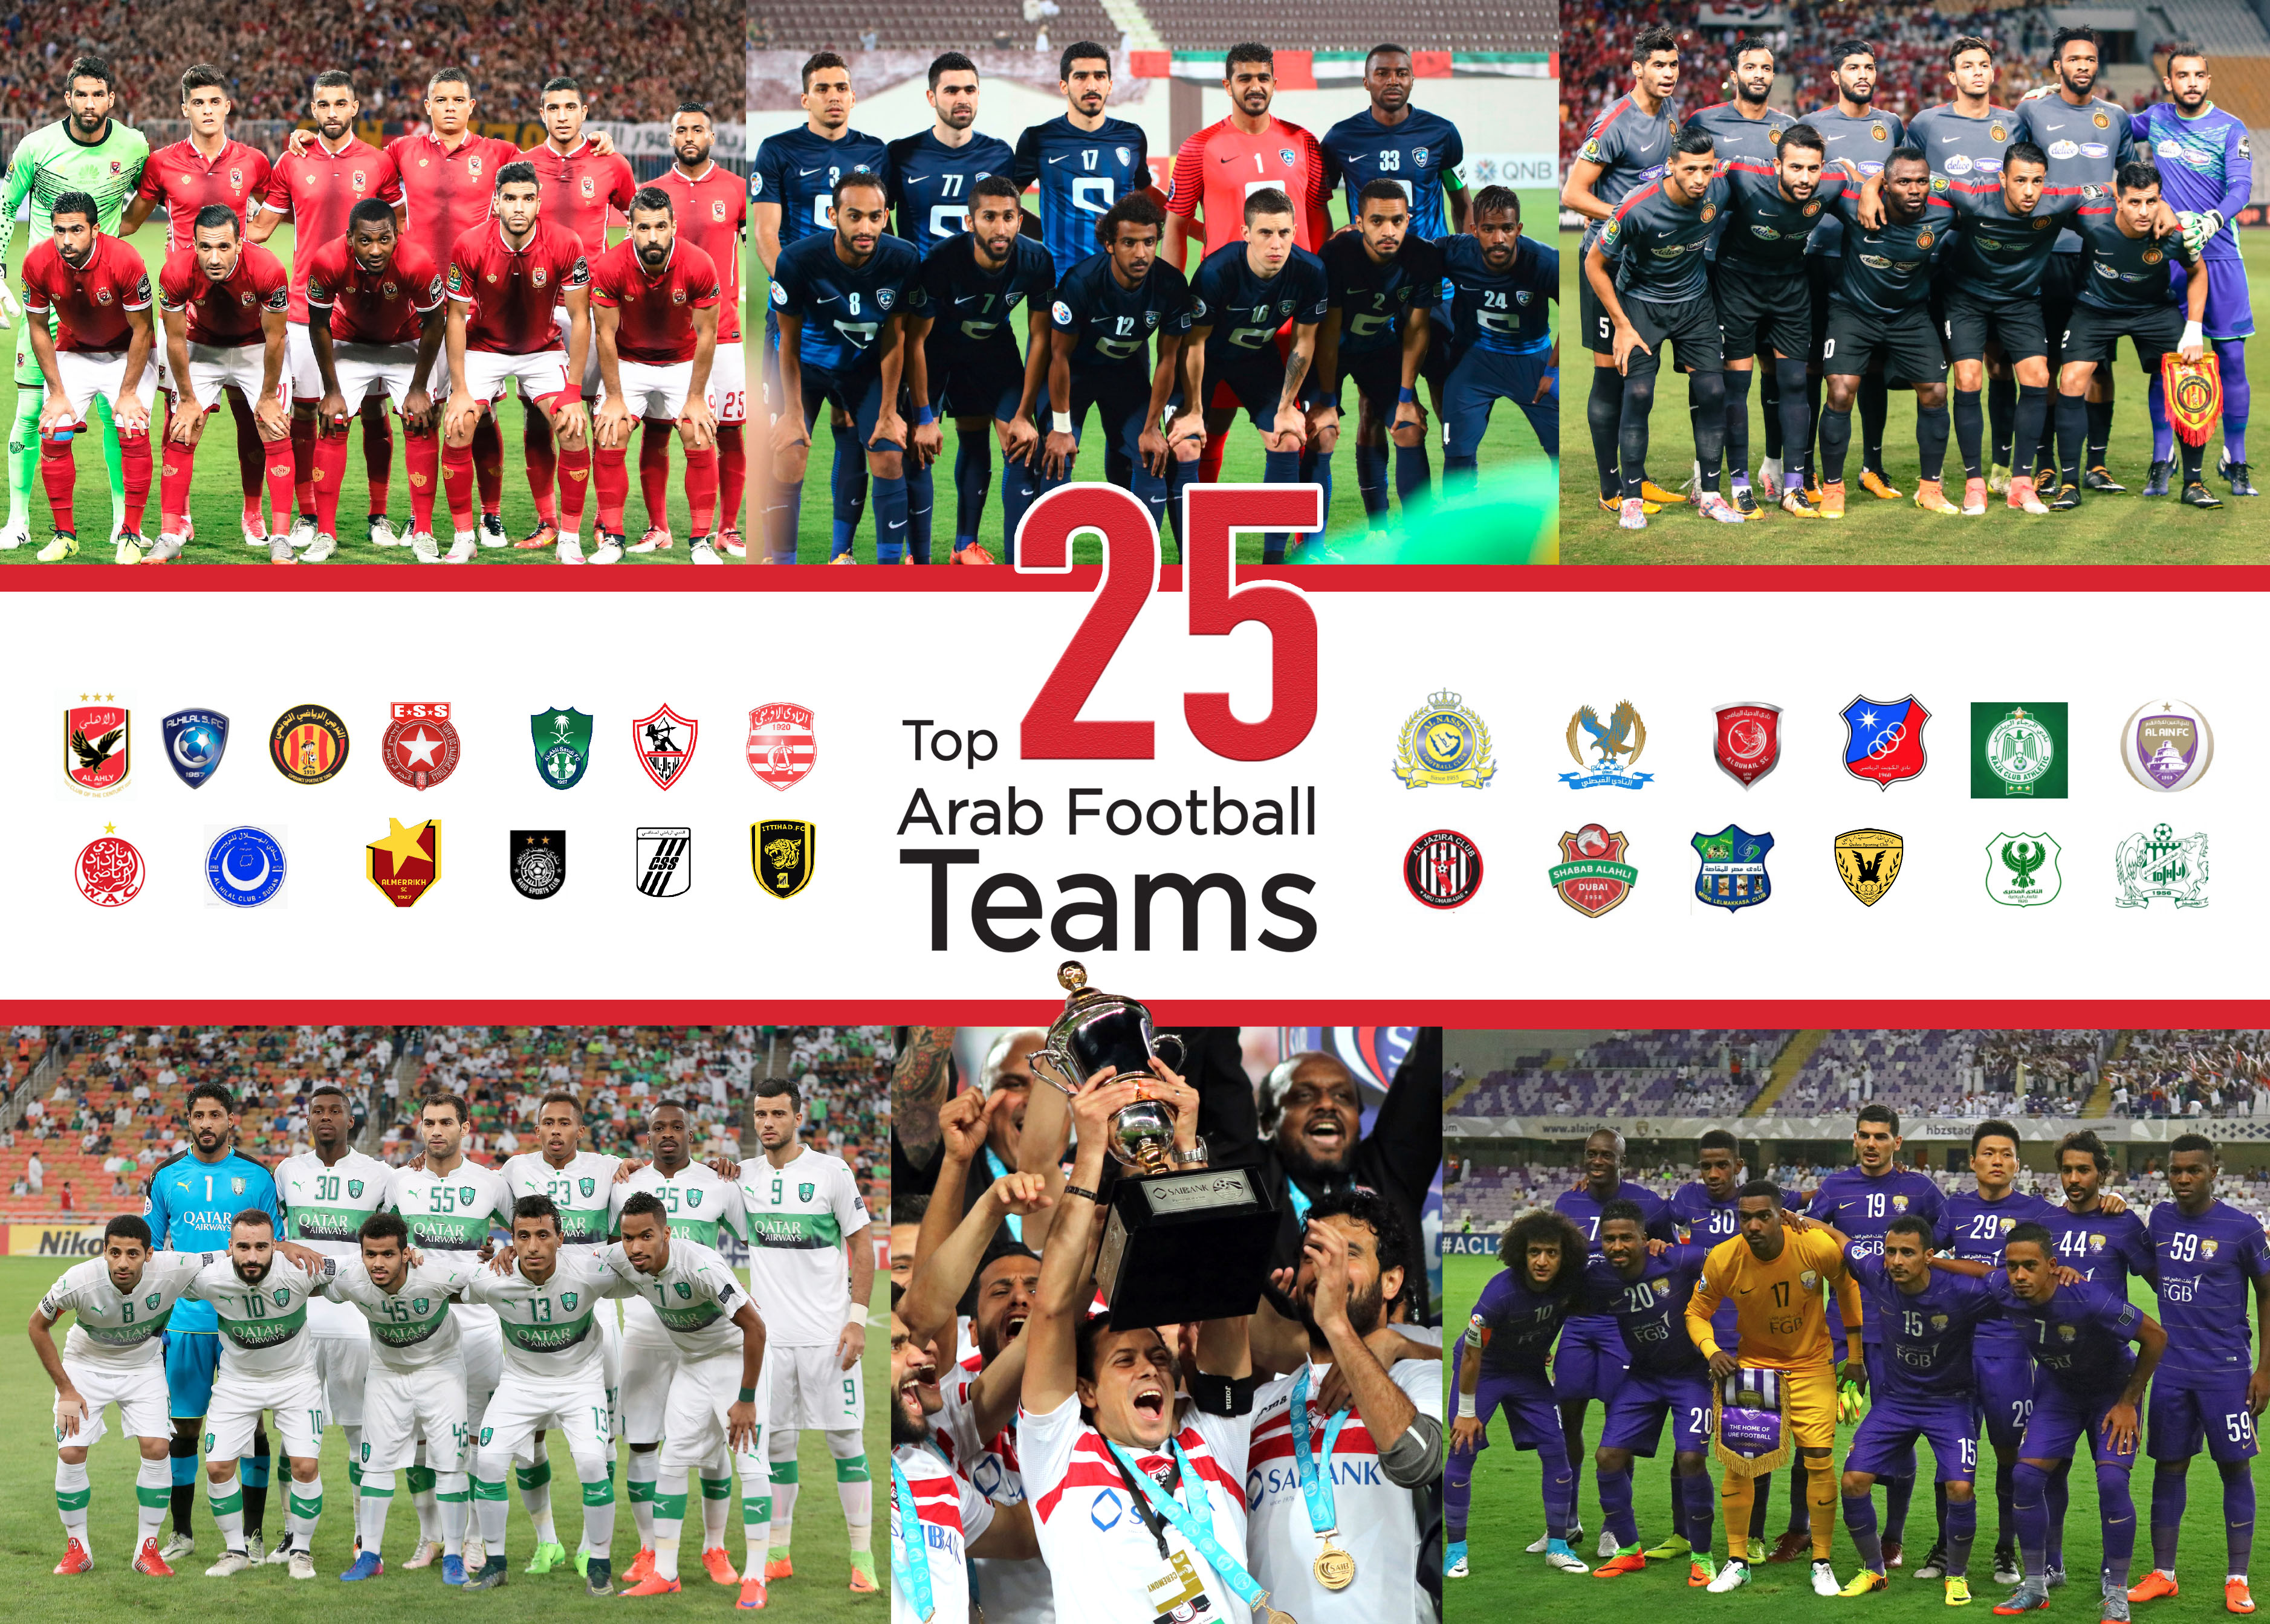 Top 25 Arab Football Teams 2017